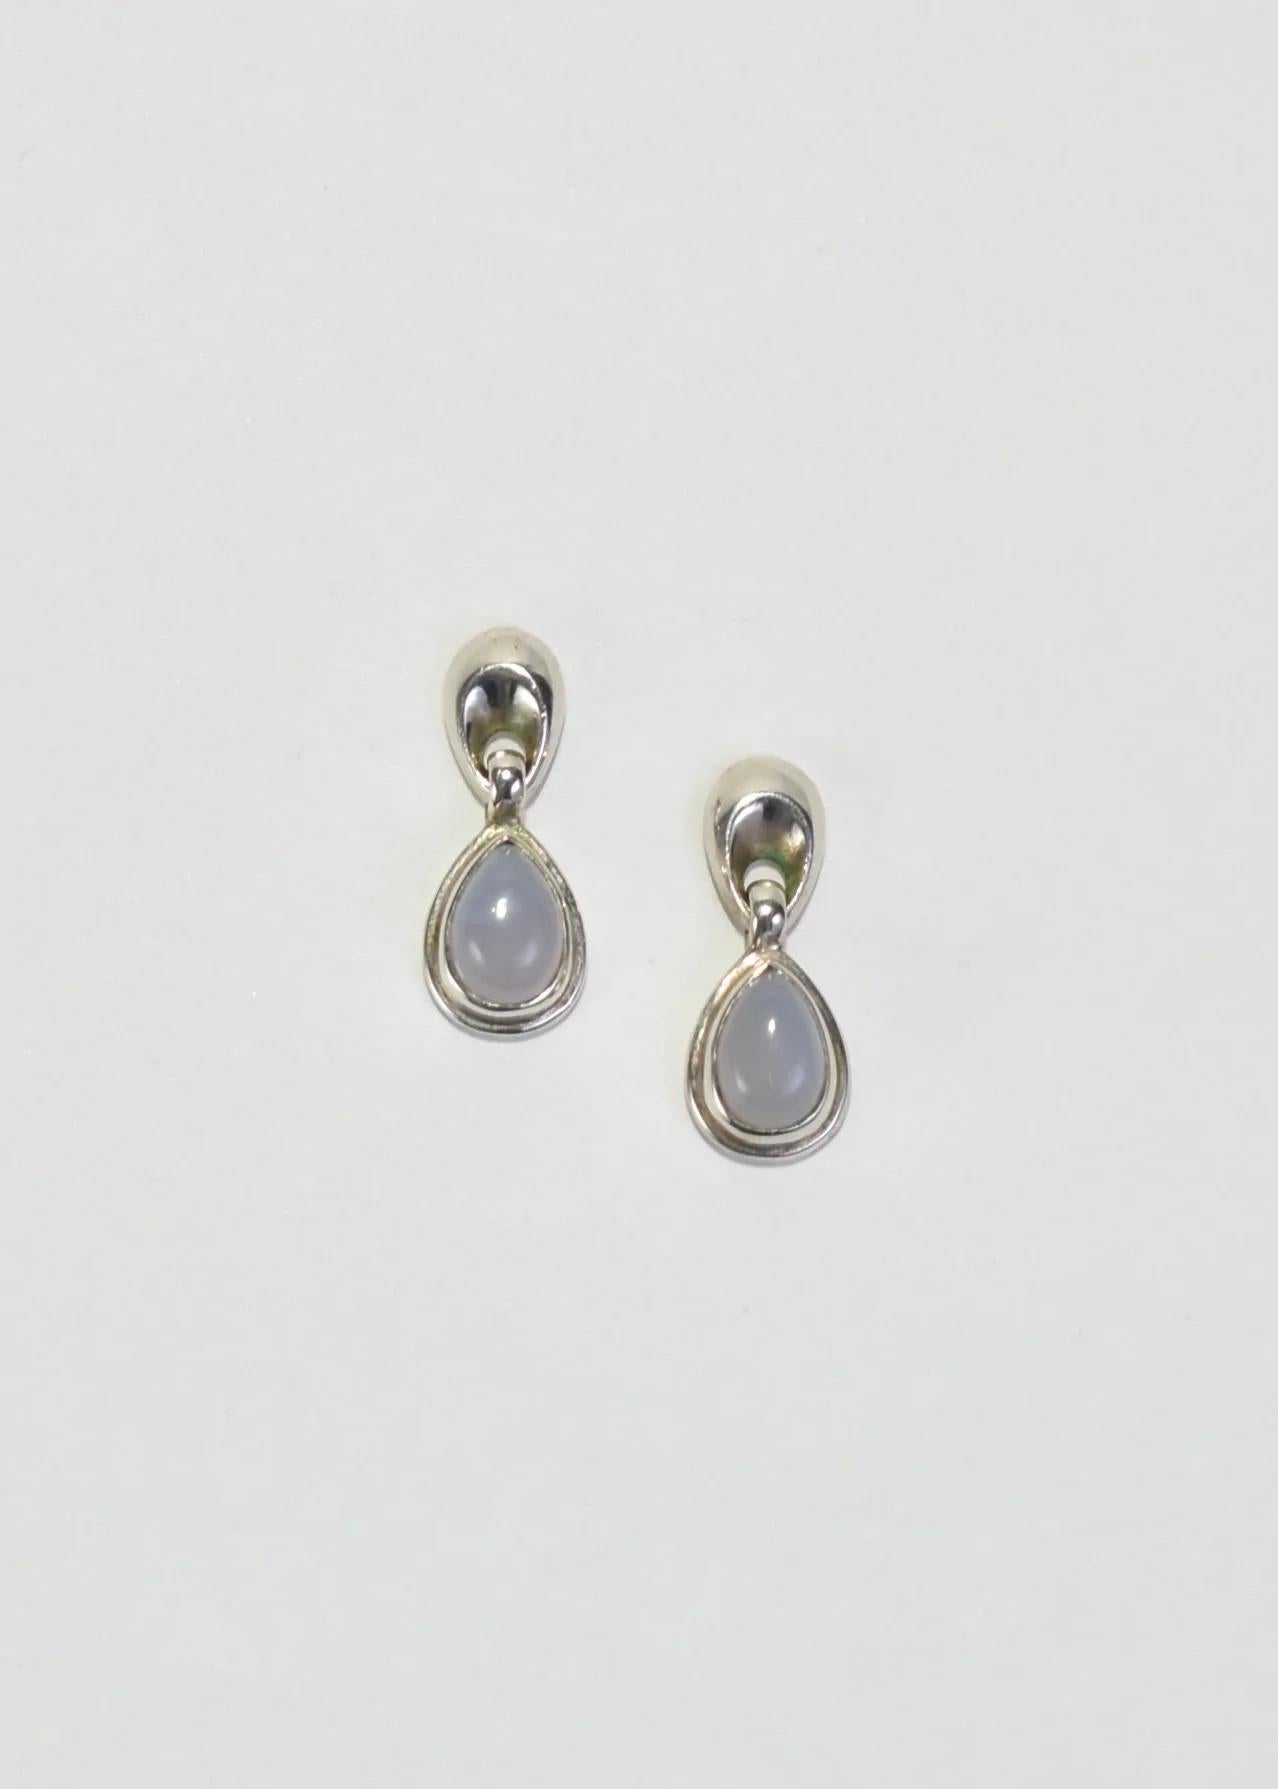 Beautiful vintage sterling earrings with moonstone drop detail, pierced. Stamped 925.

Material: Sterling silver, moonstone. 